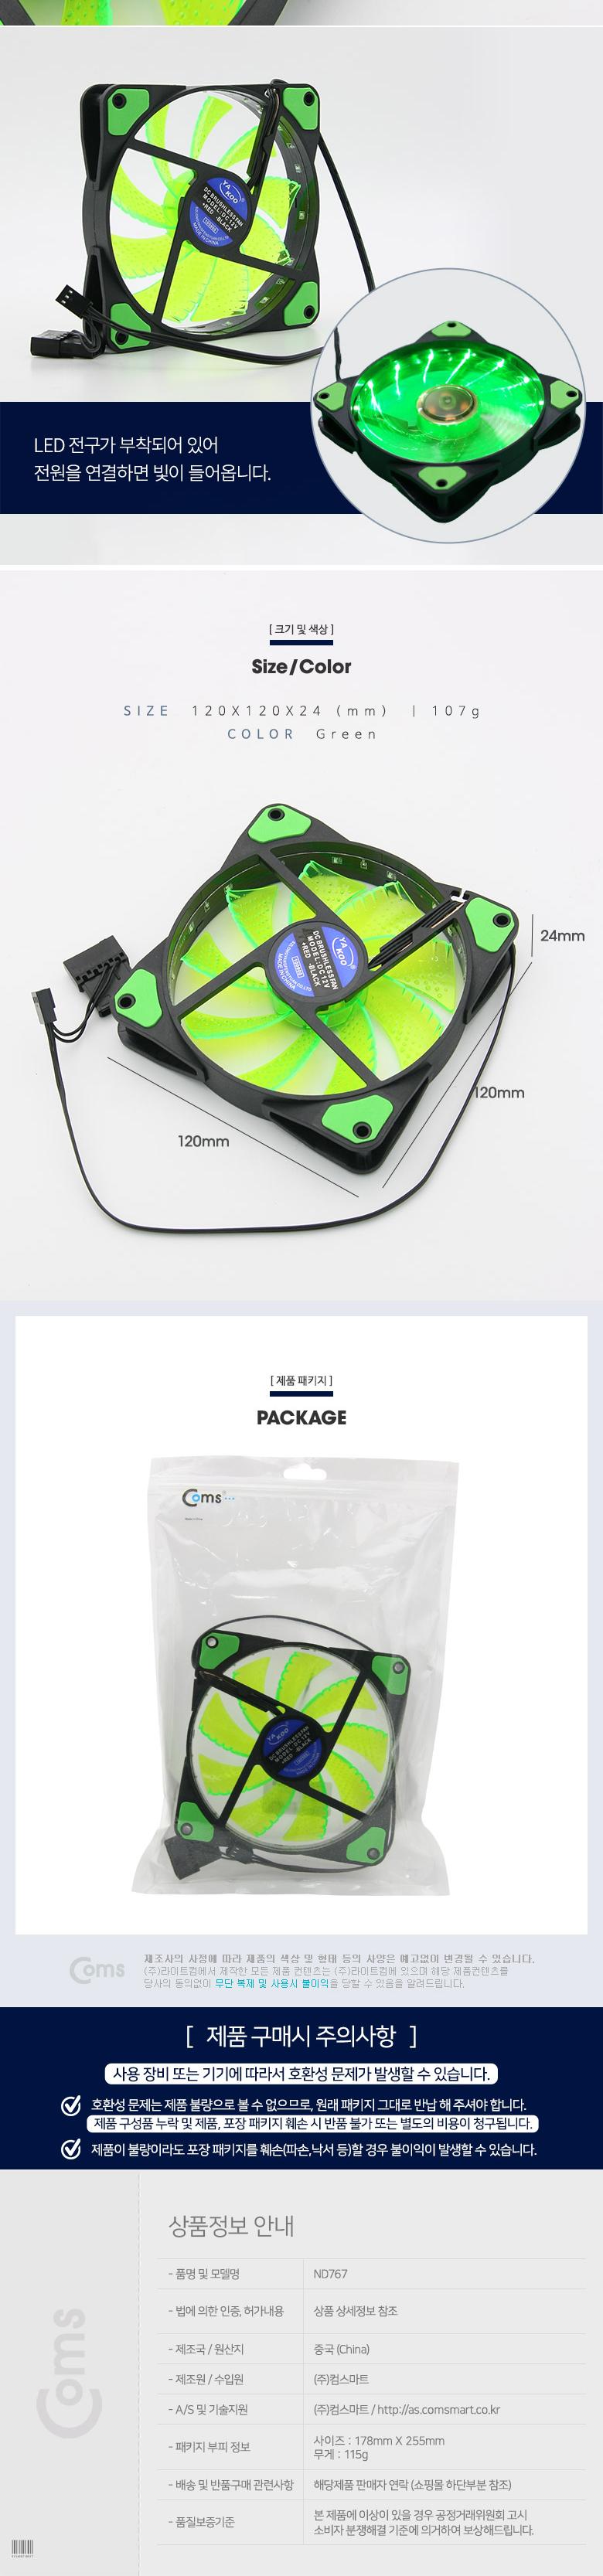 Coms  ̽ CASE Green LED  120mm  Ǿ PC LED ̽ ̽  PC̽ Ǿ̽ PC̽ Ǿ̽